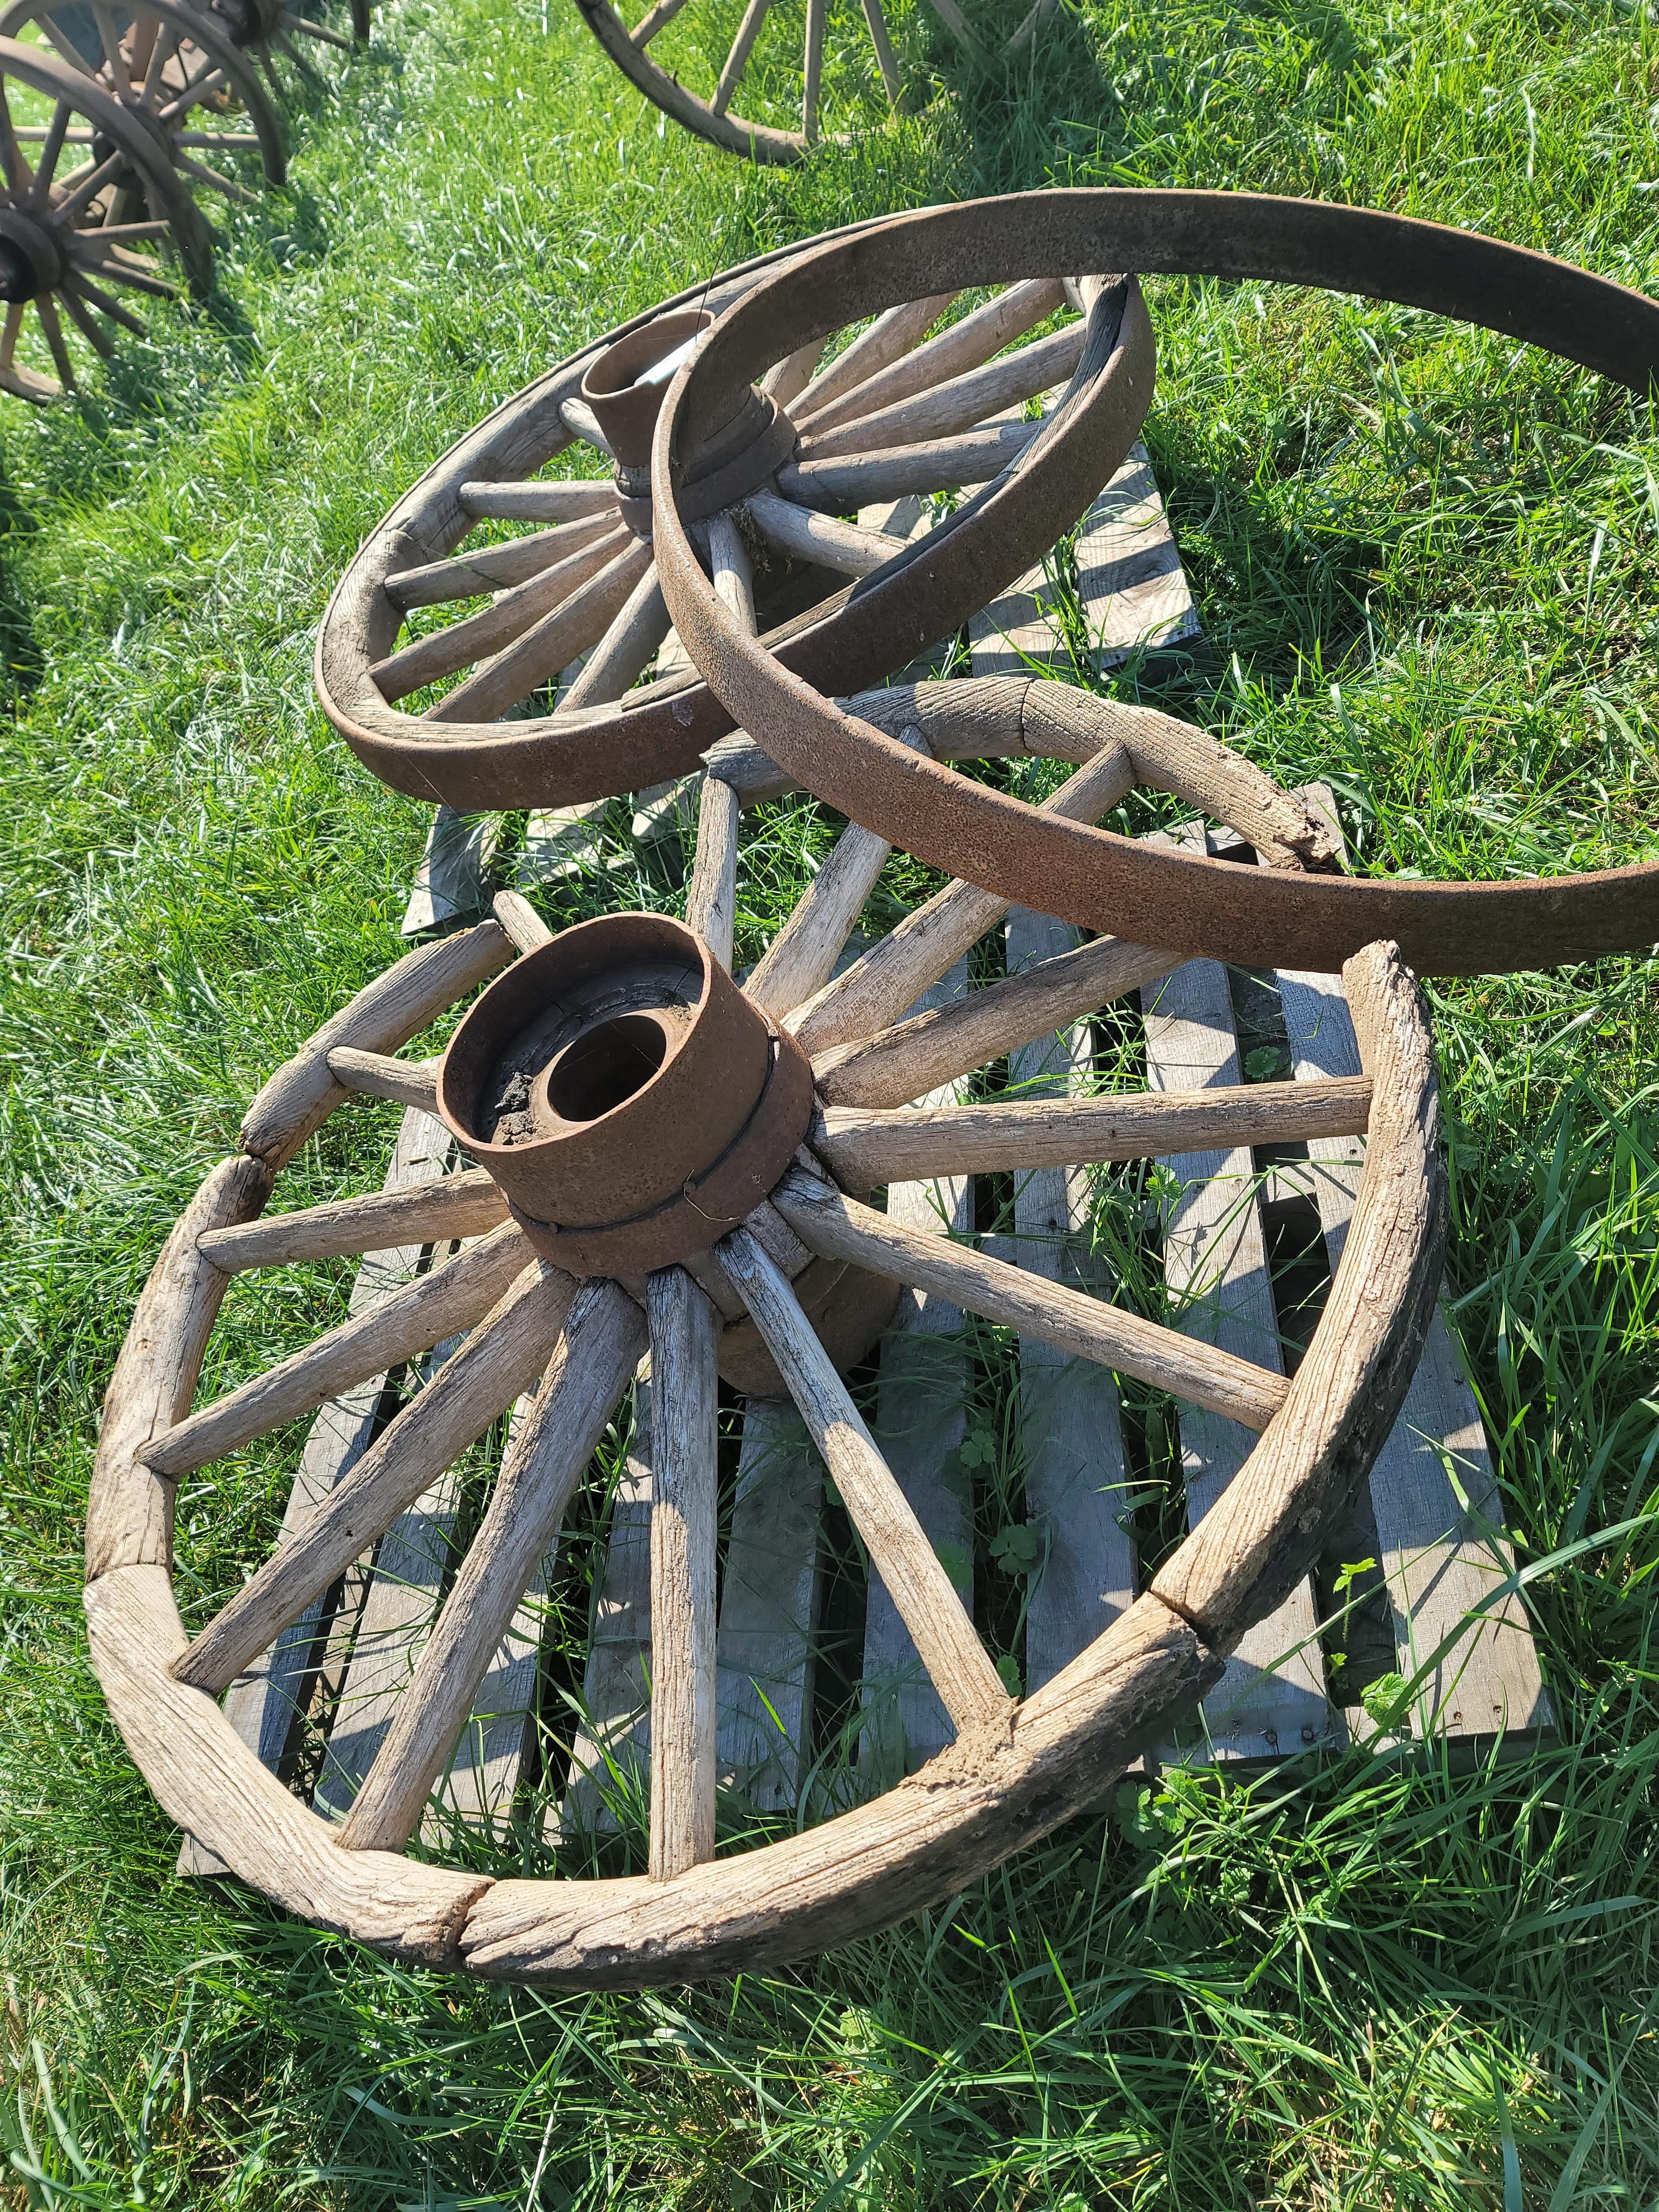 2 Conestoga style wagon wheels